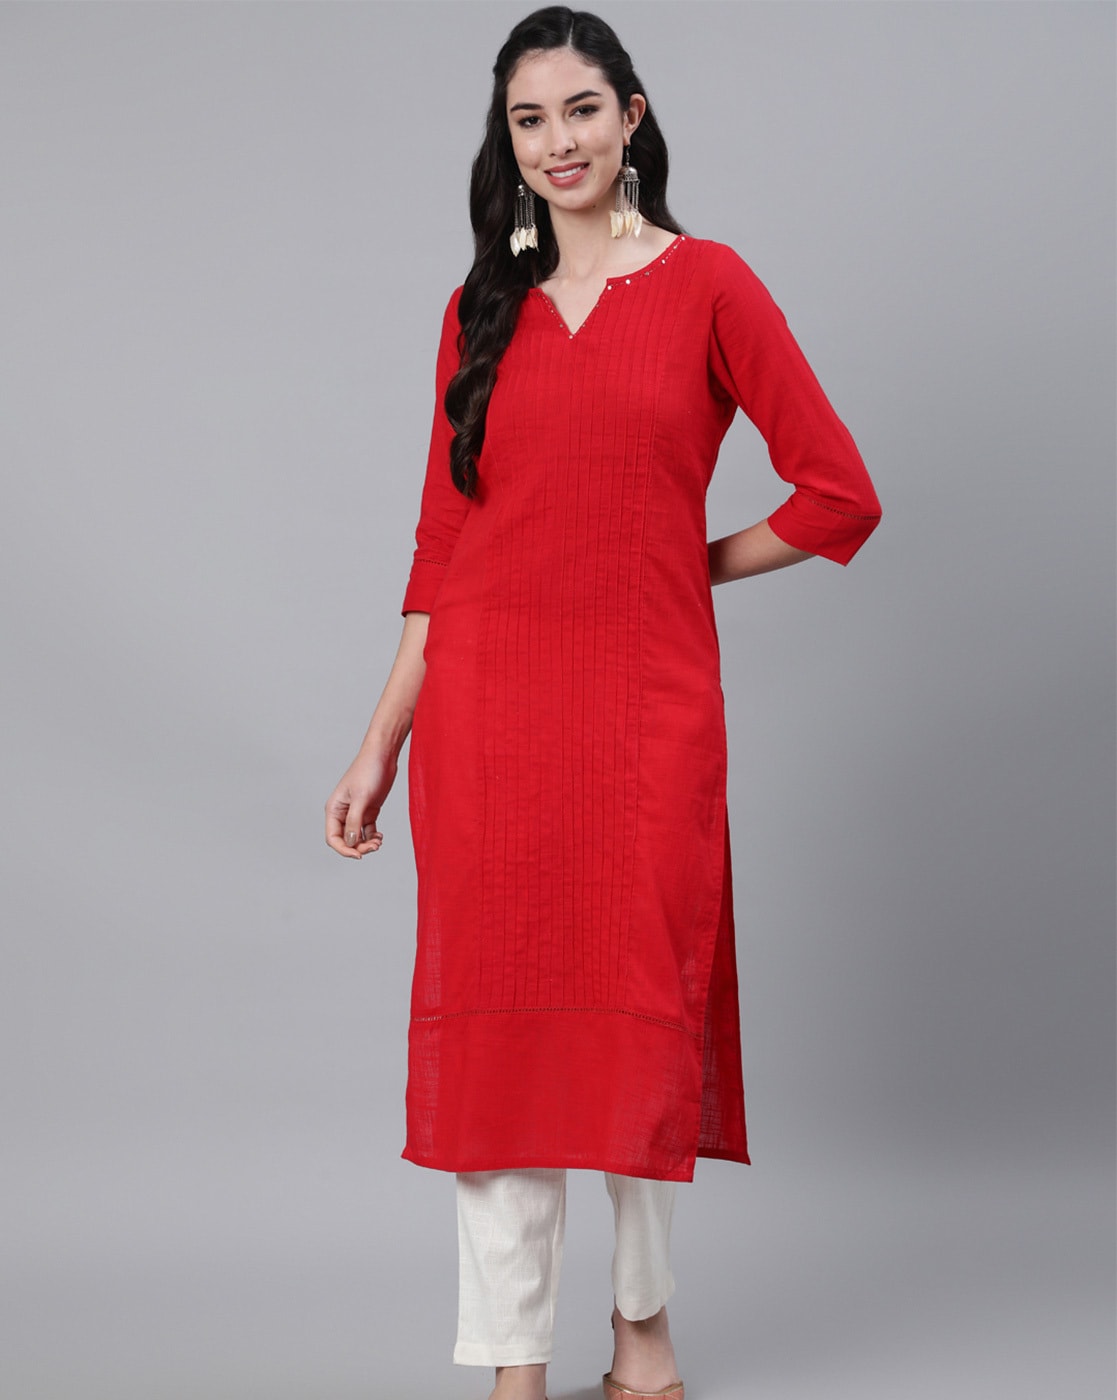 Rayon Red Kurti Pant Set, Size: Large, 130GSM at Rs 550/piece in Jaipur |  ID: 25013990430